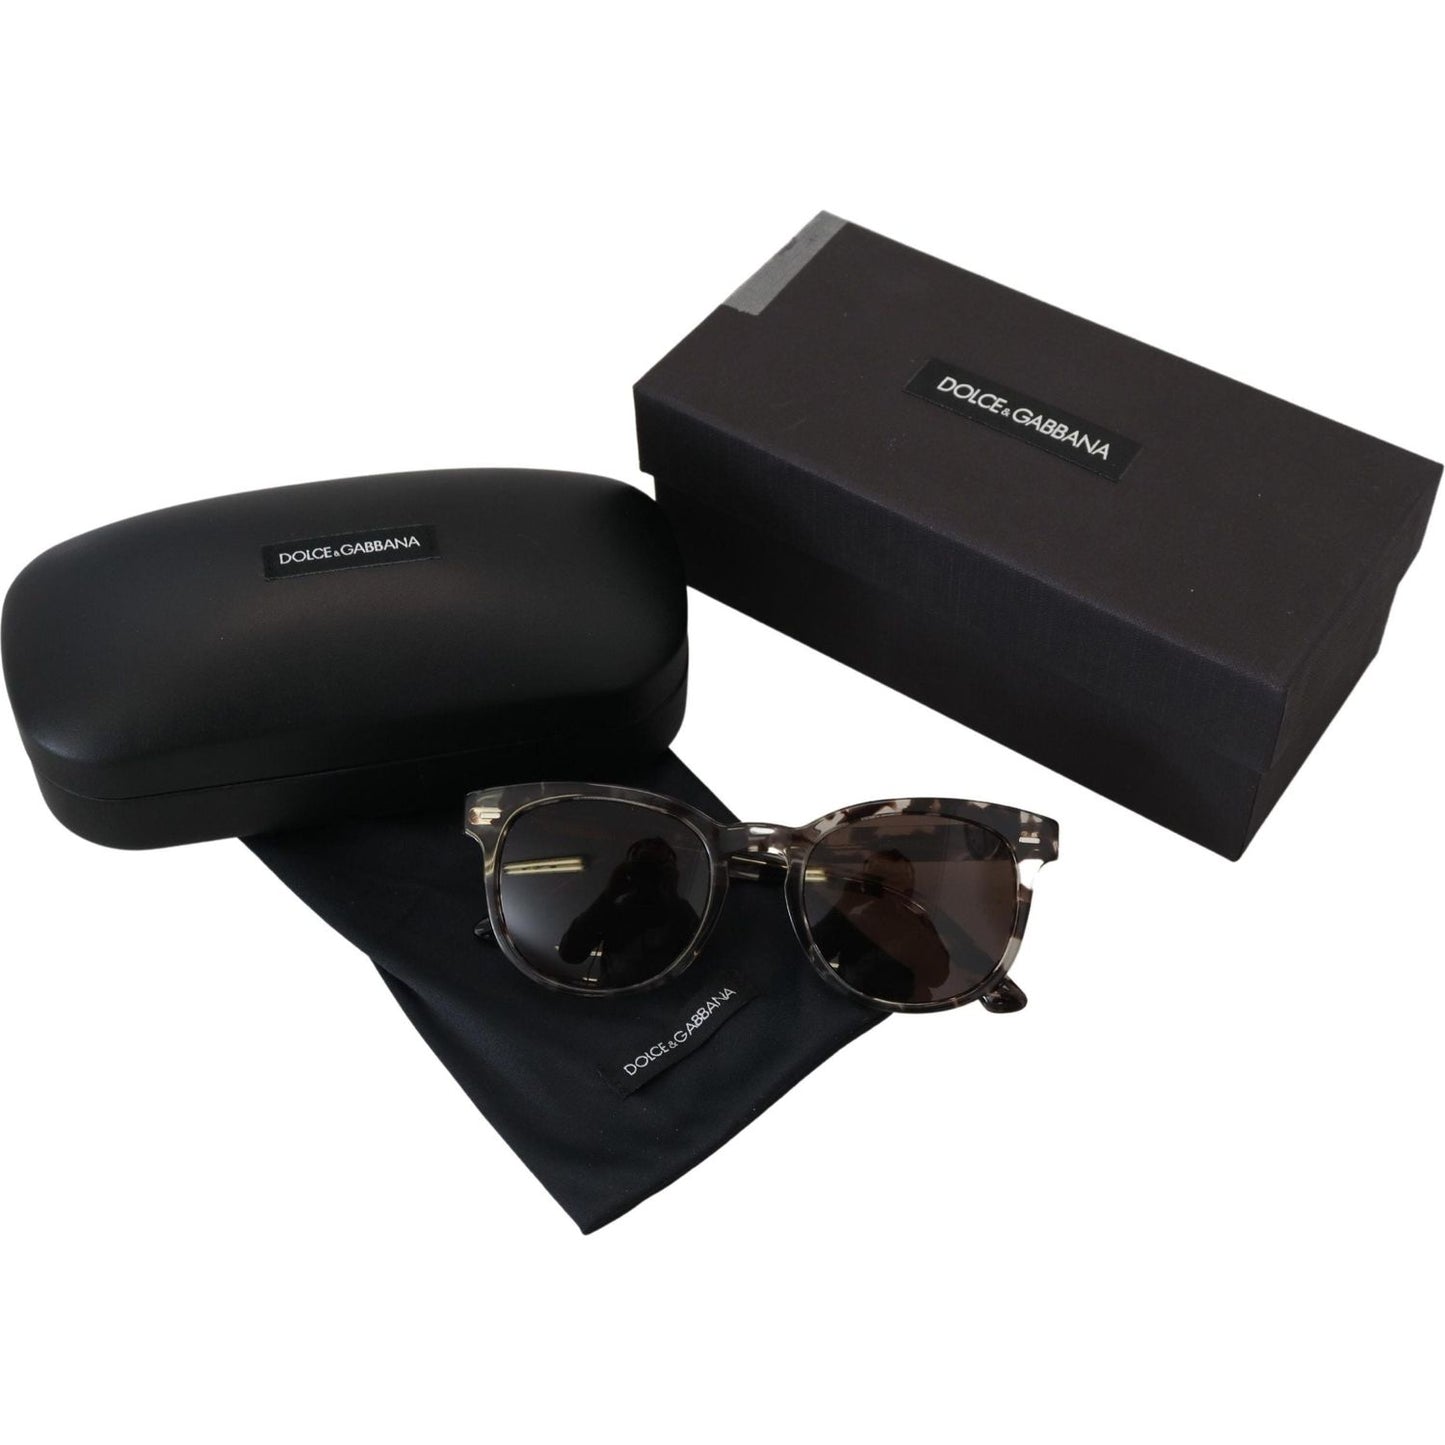 Dolce & Gabbana Chic Havana Brown Acetate Sunglasses brown-havana-frame-round-lens-women-dg4254f-sunglasses